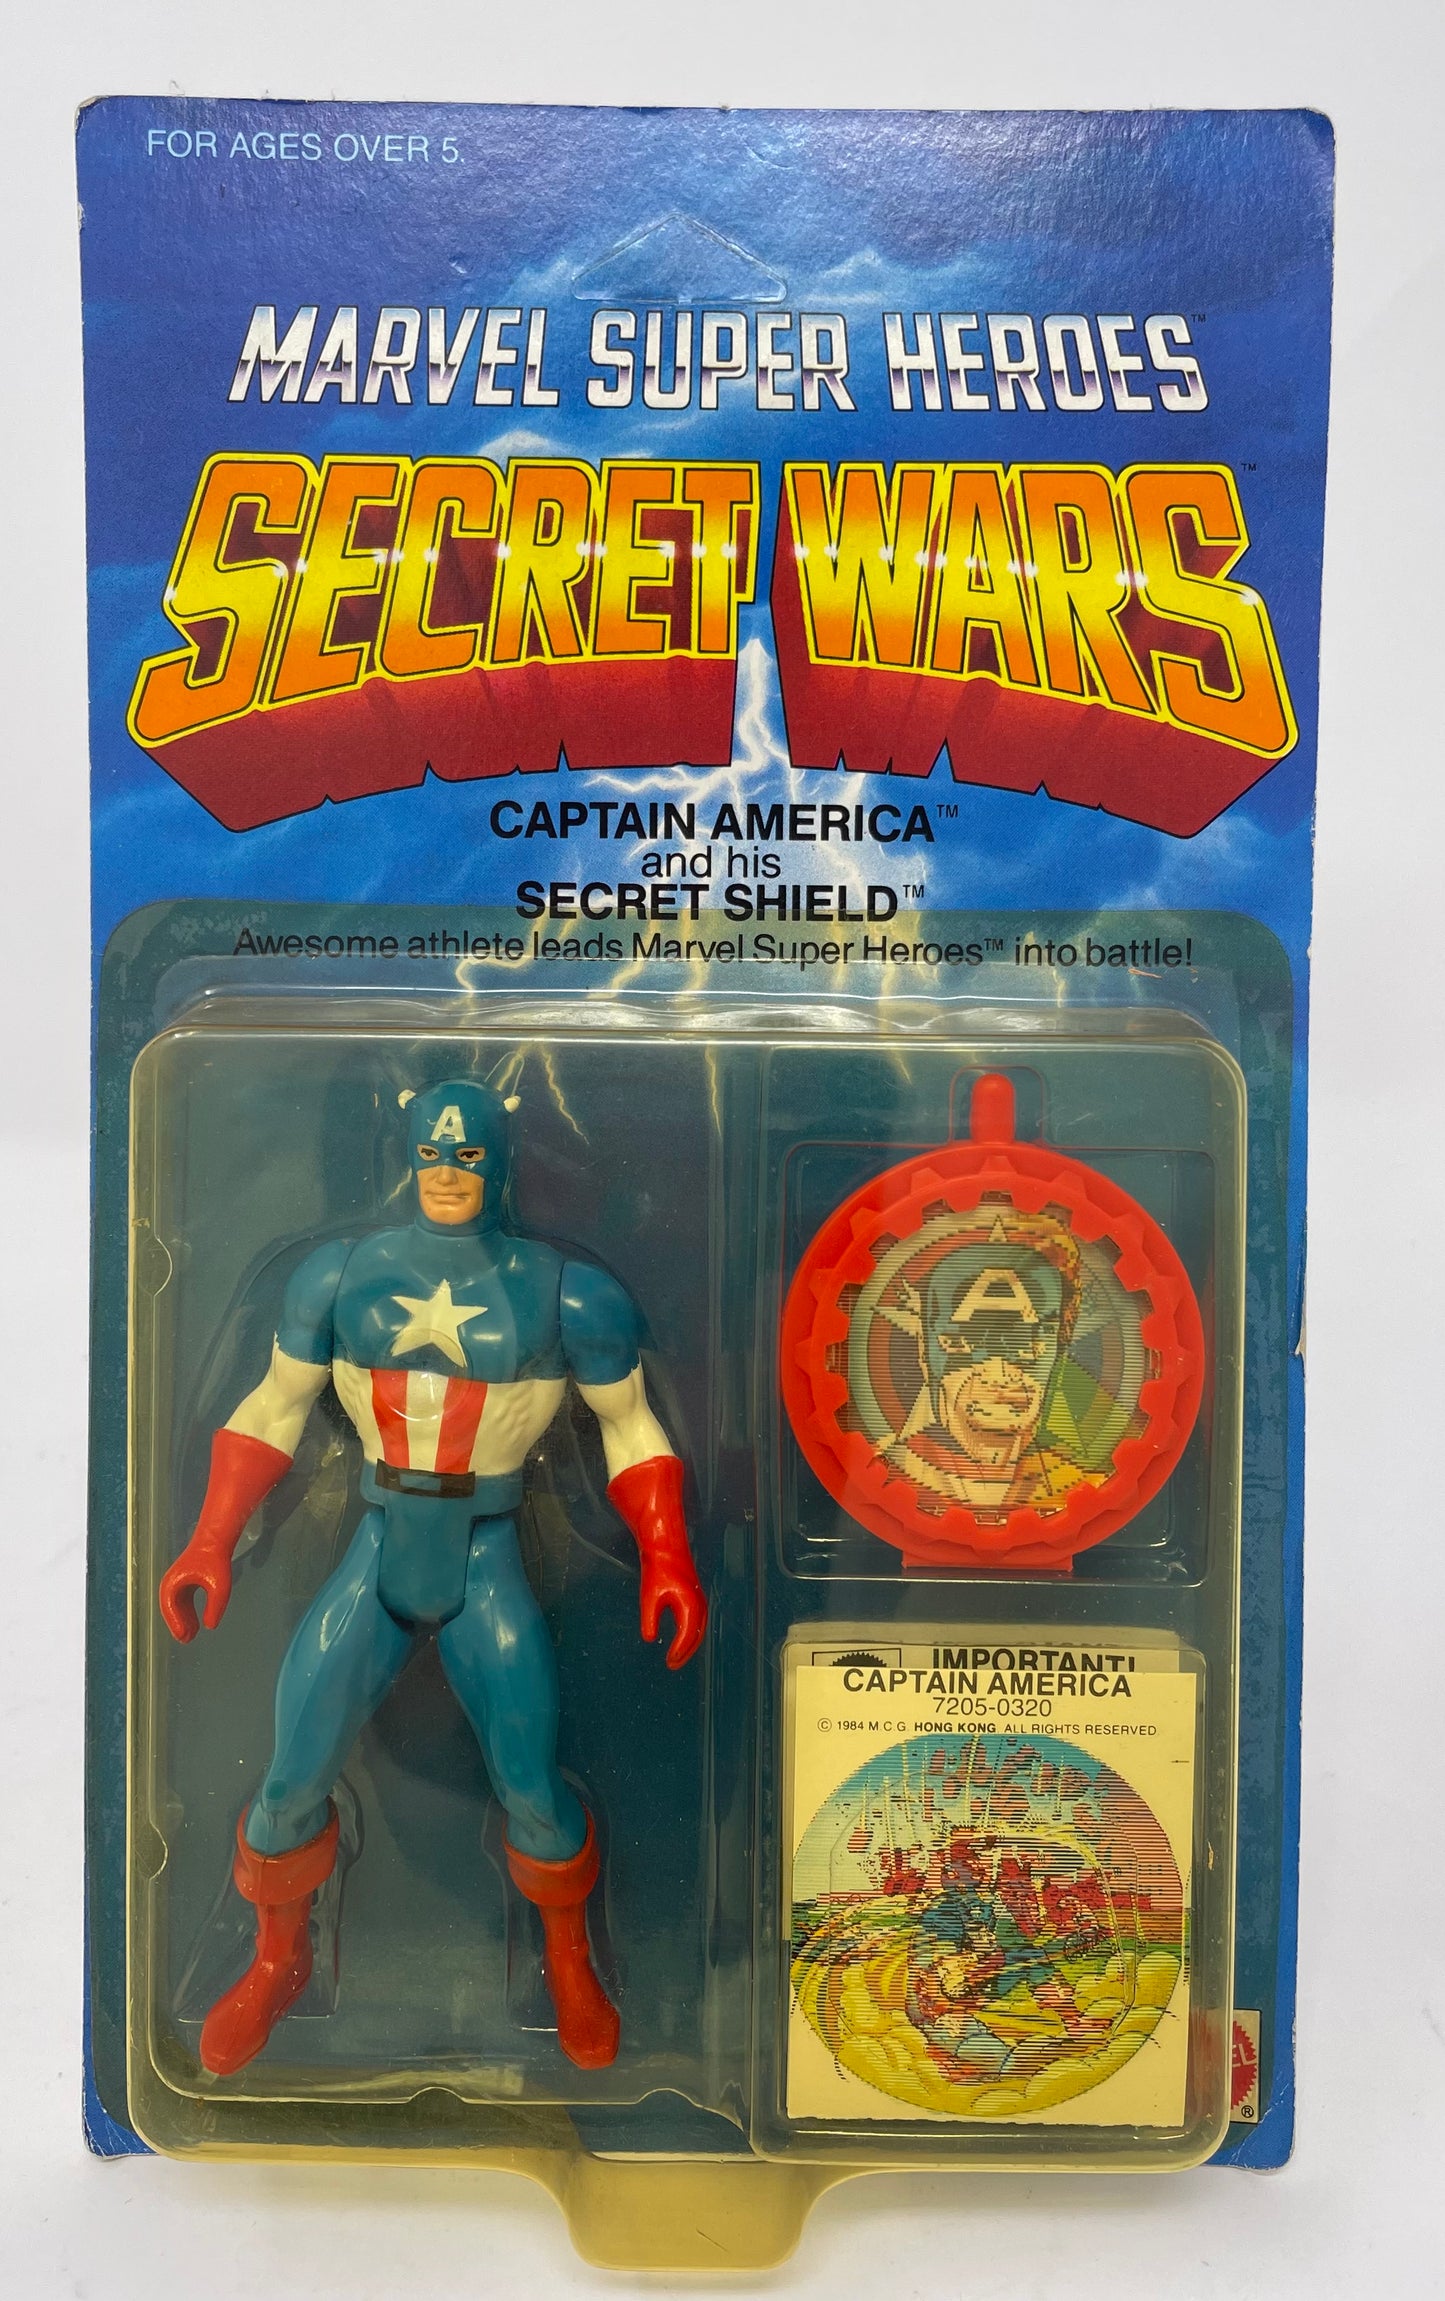 CAPTAIN AMERICA AND HIS SECRET SHIELD - MARVEL SUPER HEROES - SECRET WARS - #7205 - MATTEL 1984